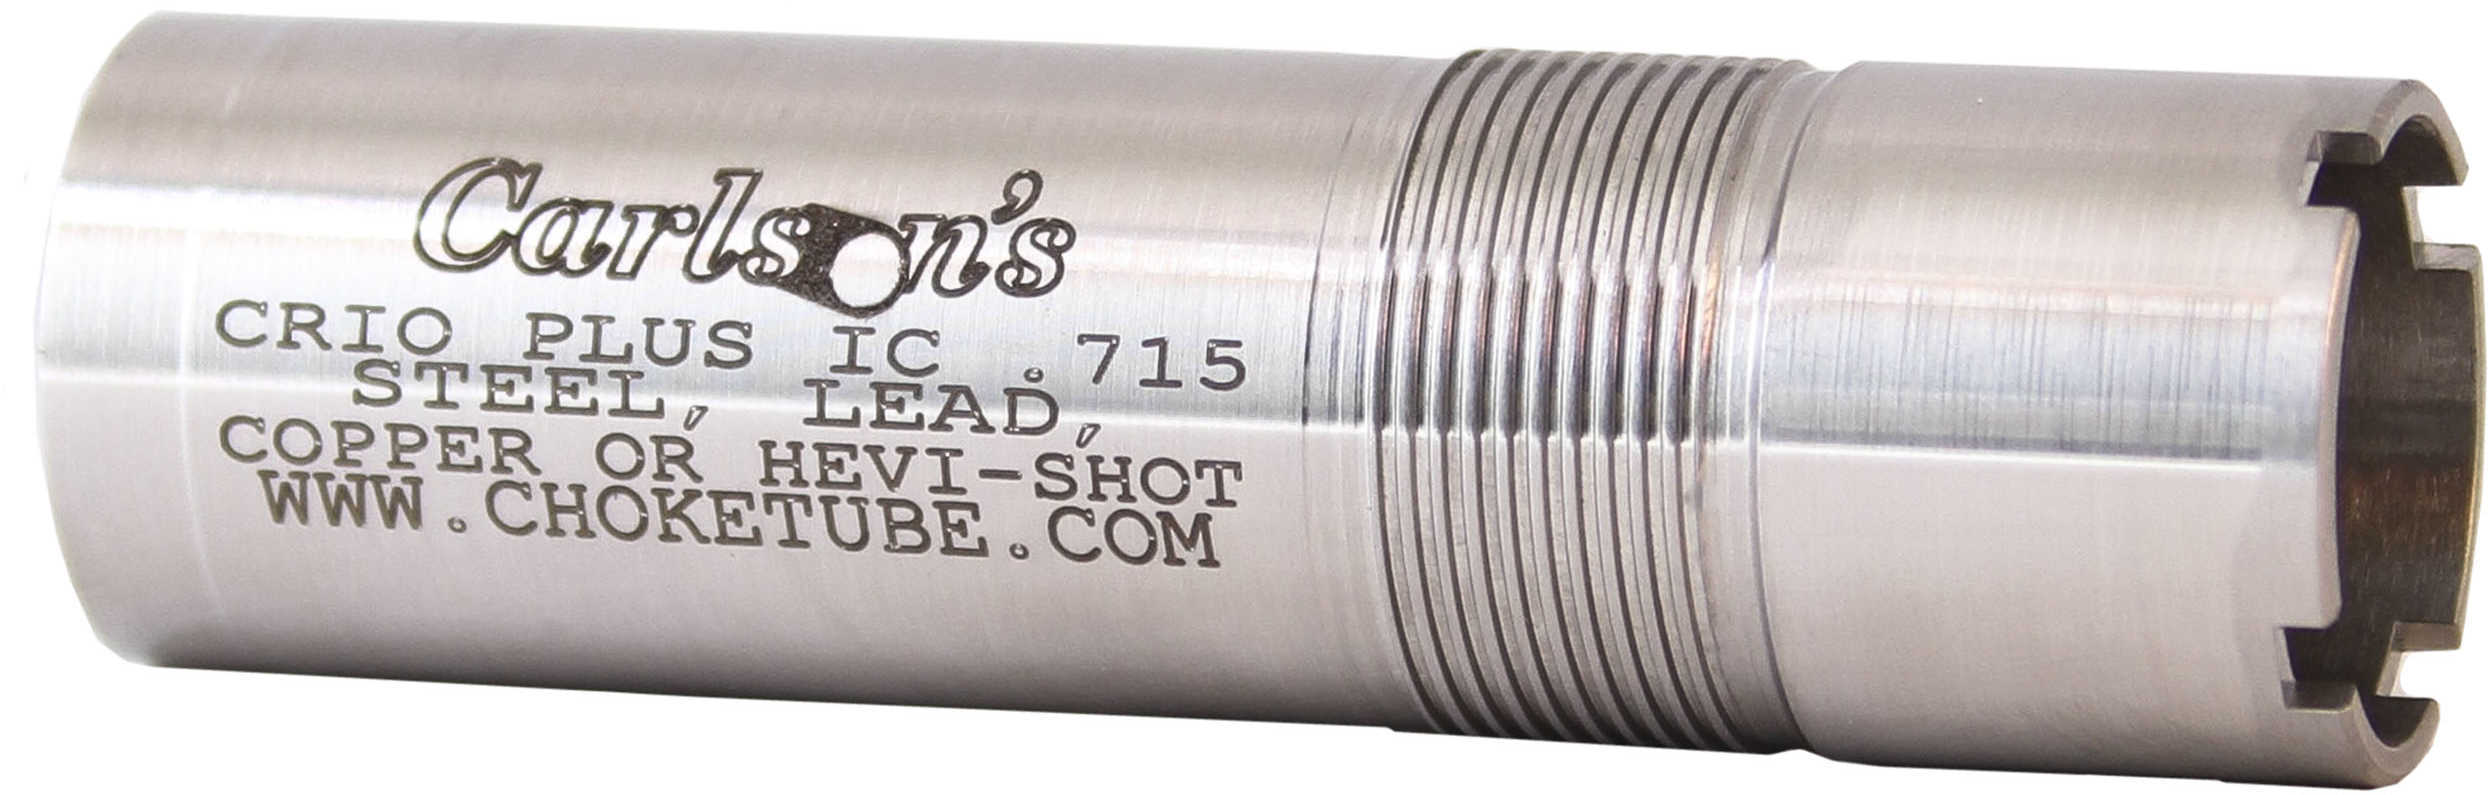 Carlsons Flush Improved Cylinder Choke Tube For Benelli Crio/Crio Plus 12Ga .715